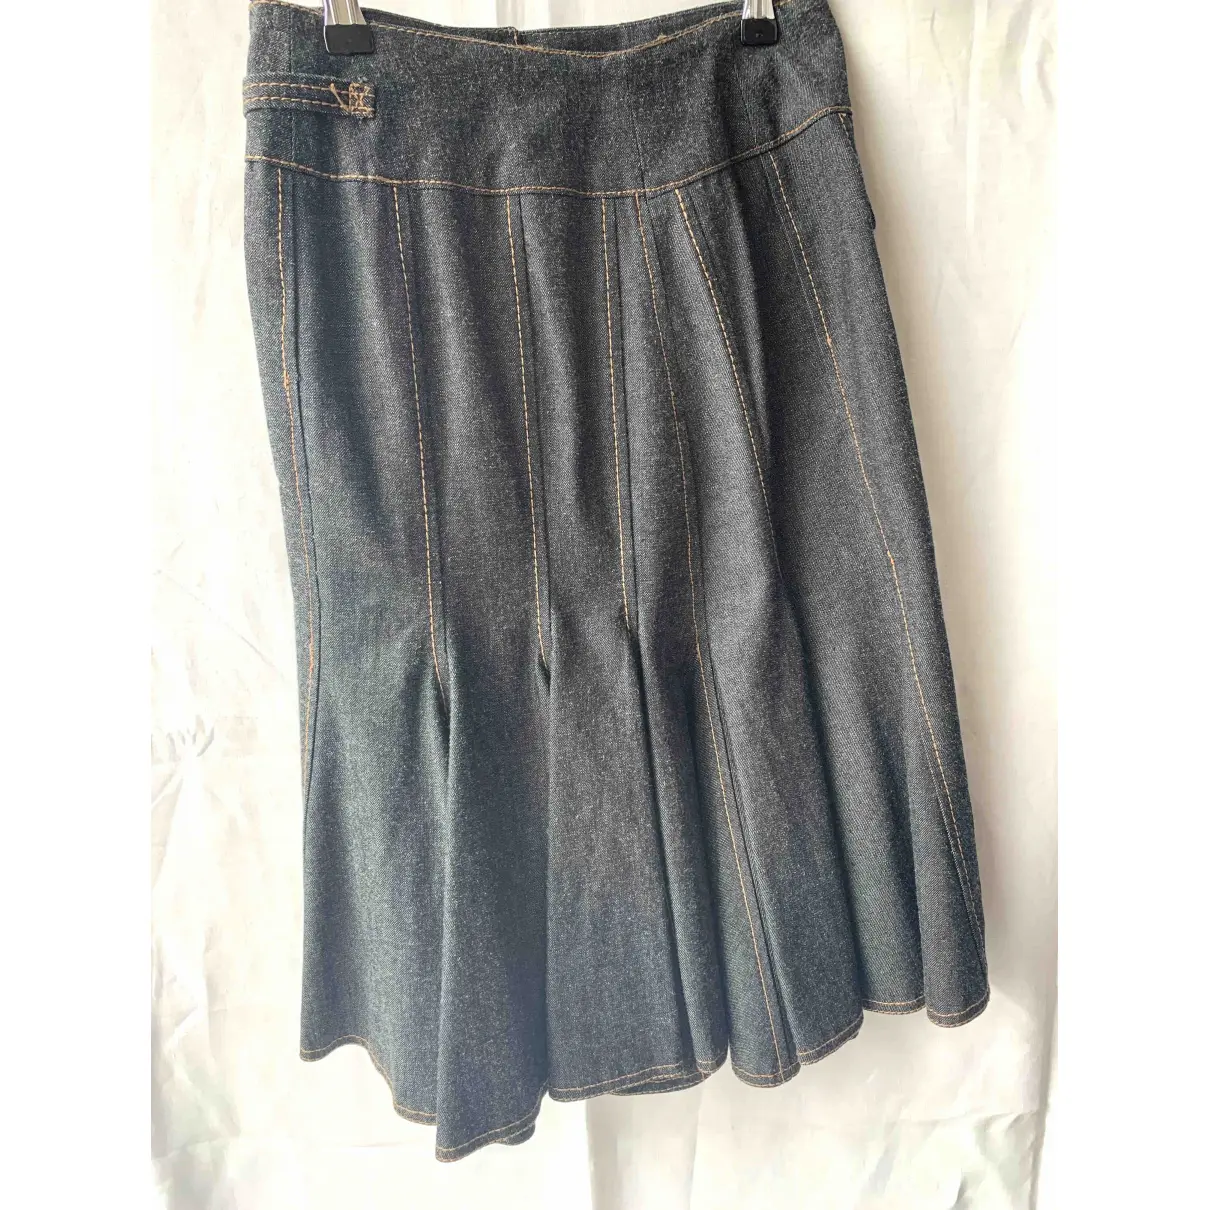 Buy Antonio Berardi Mid-length skirt online